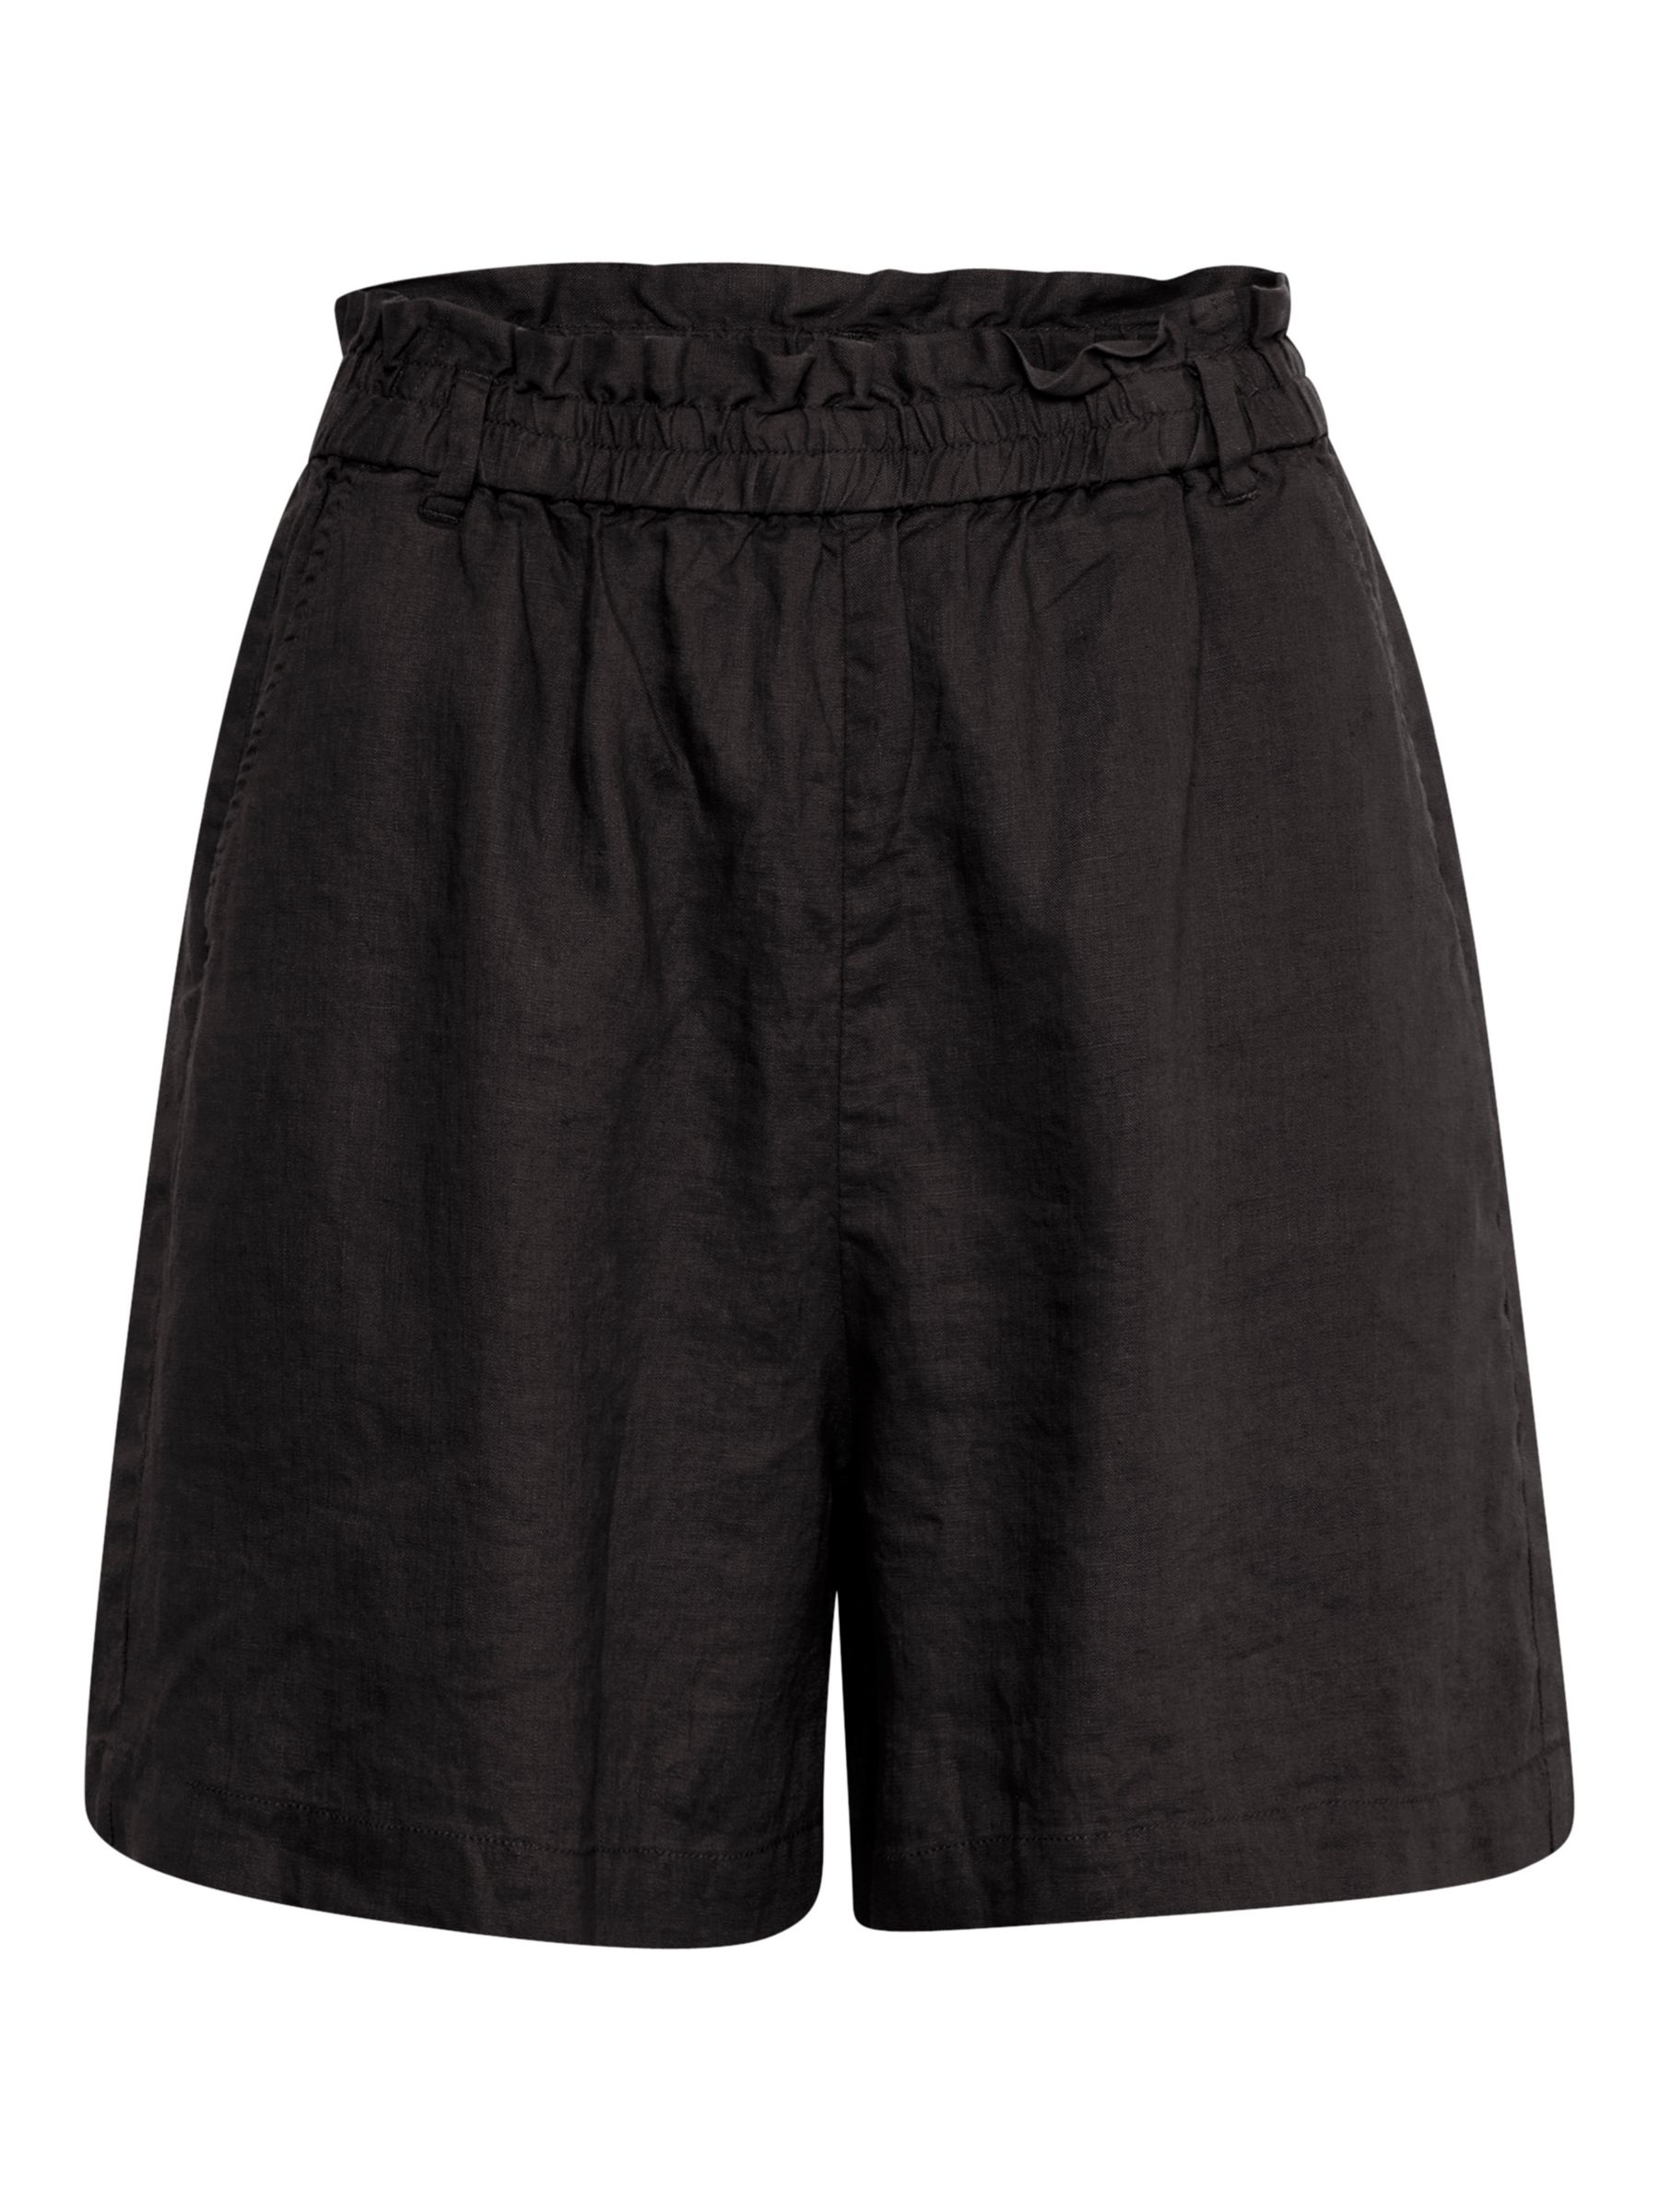 Buy Part Two Arna Plain Linen Shorts Online at johnlewis.com